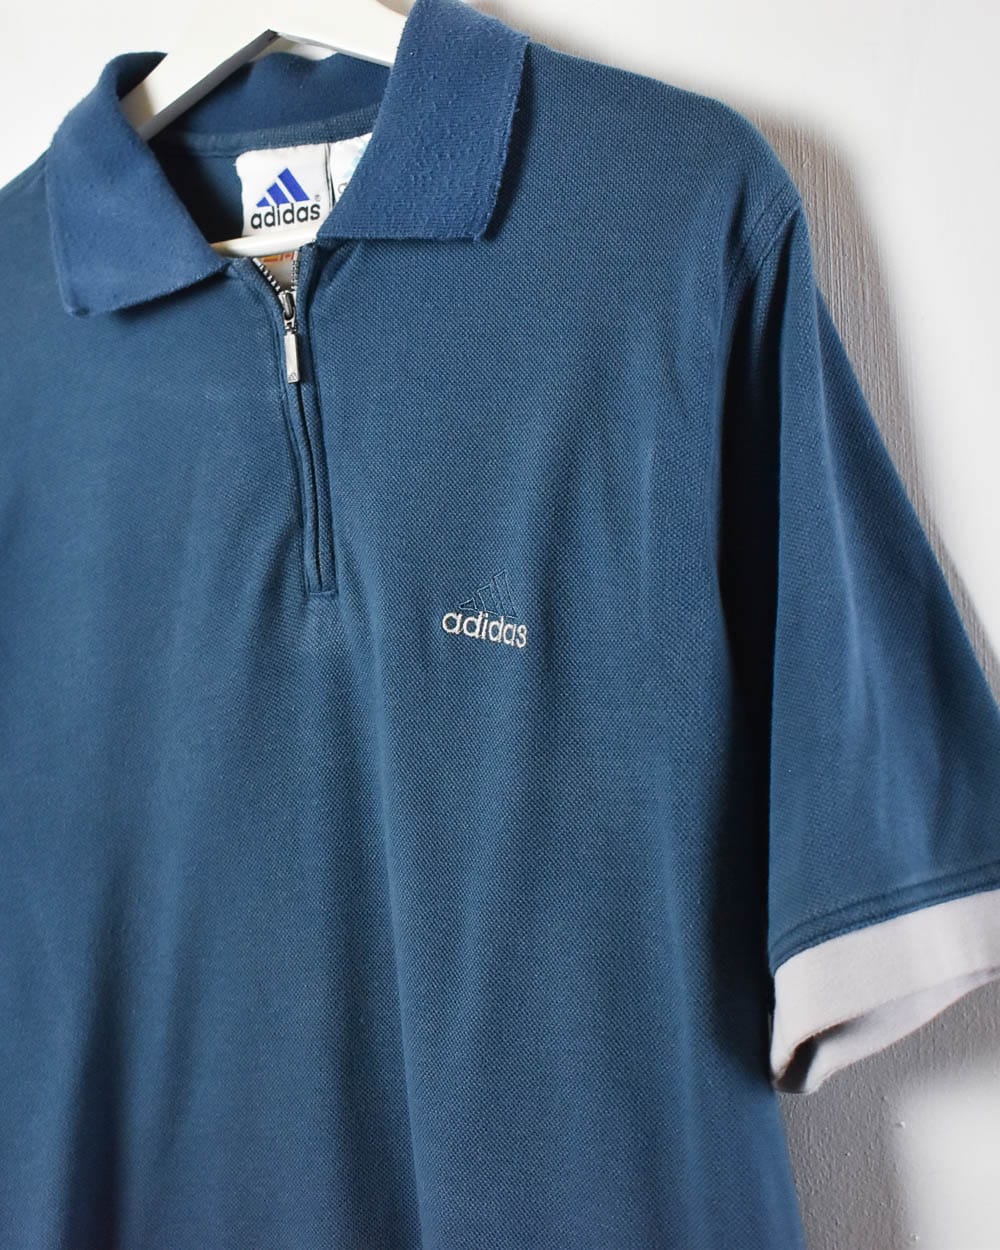 Navy Adidas 1/4 Zip Polo Shirt - Medium